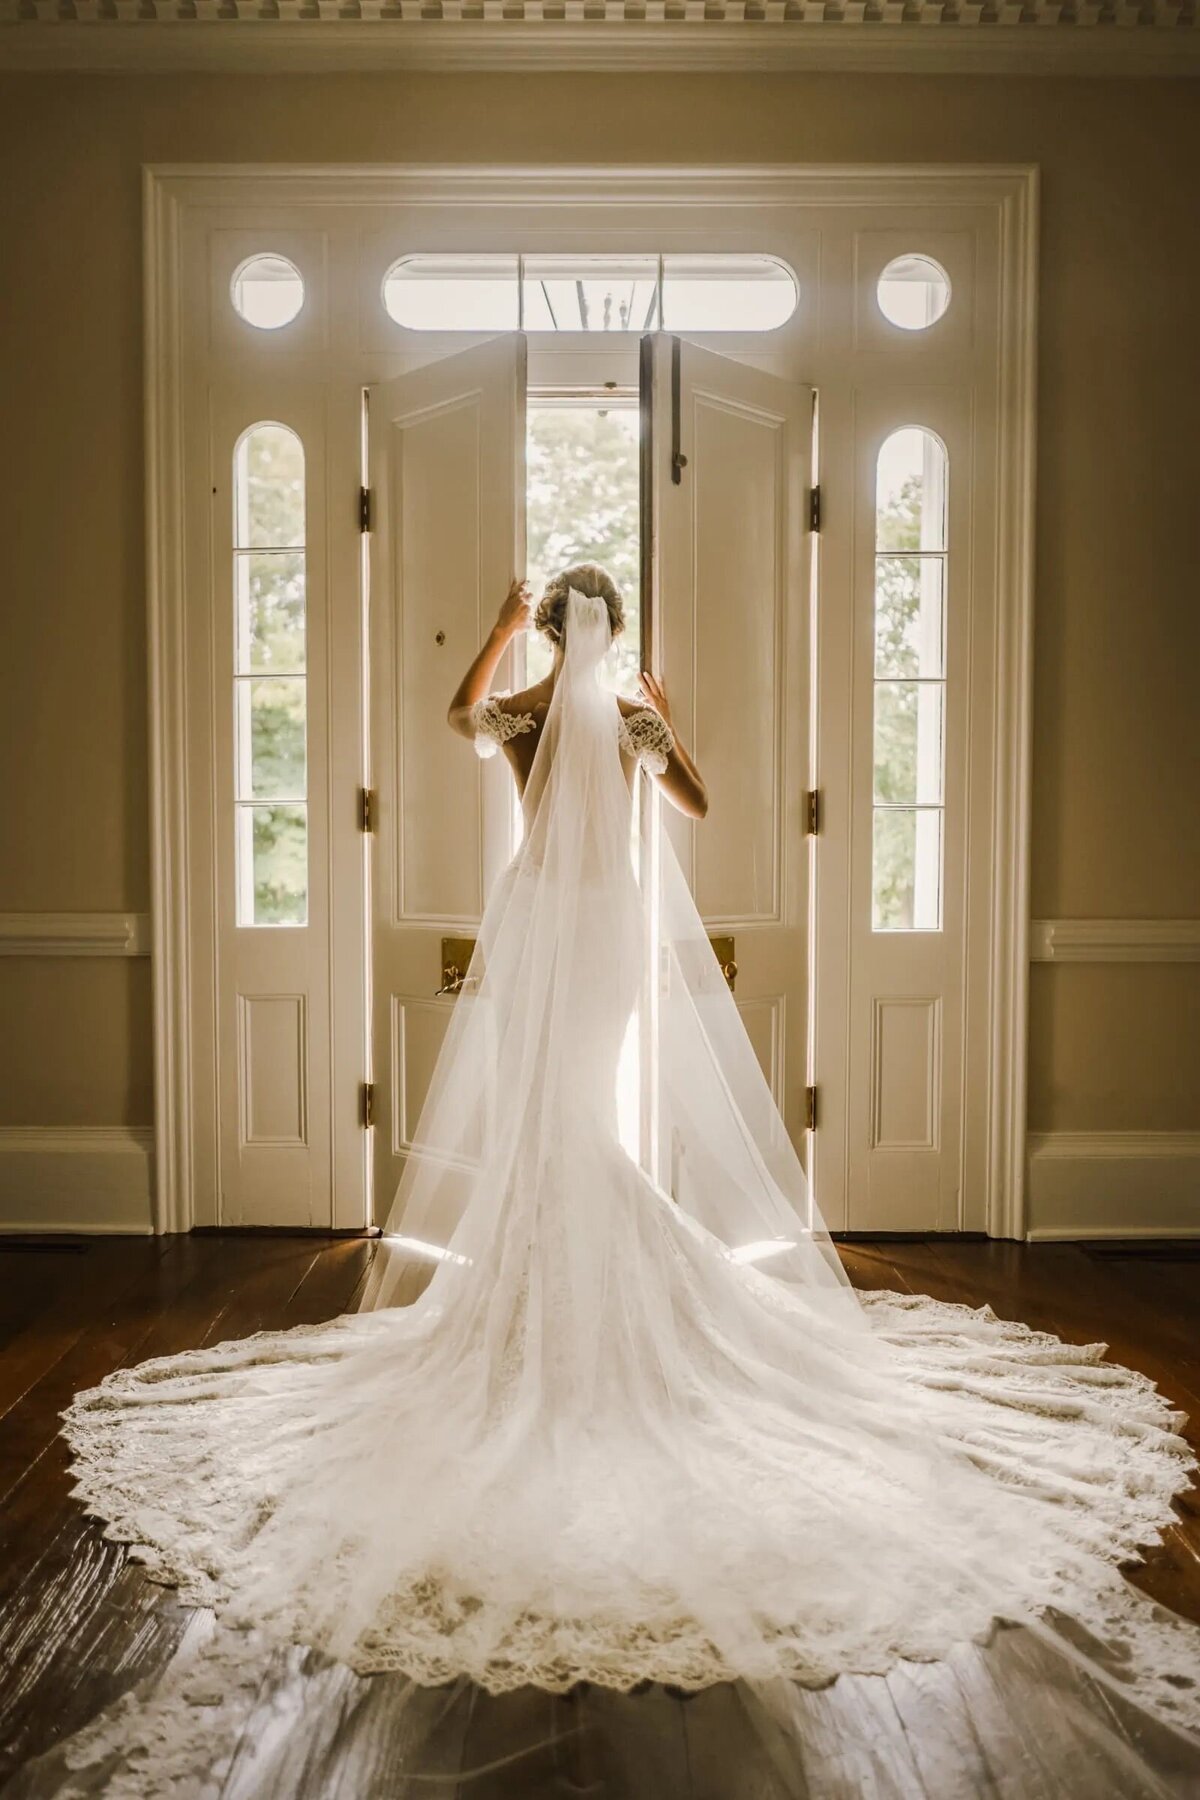 A bride opening up double doors